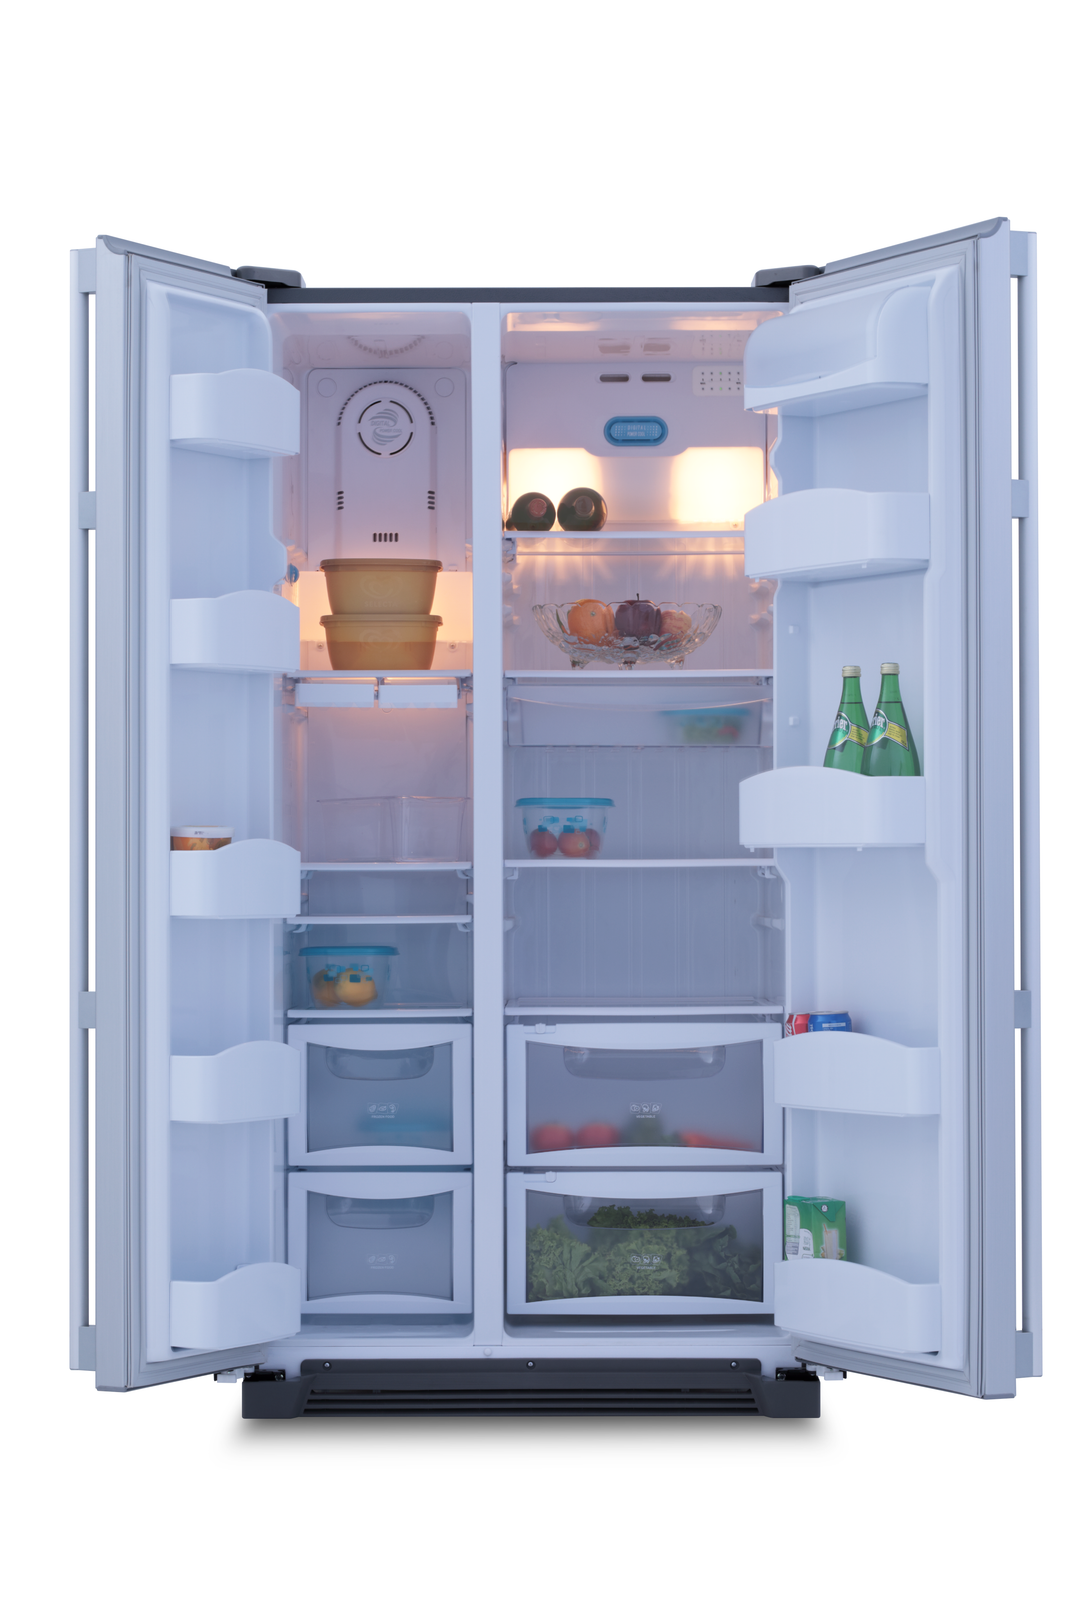 GE® 21.8 cu.ft Side by Side Refrigerator